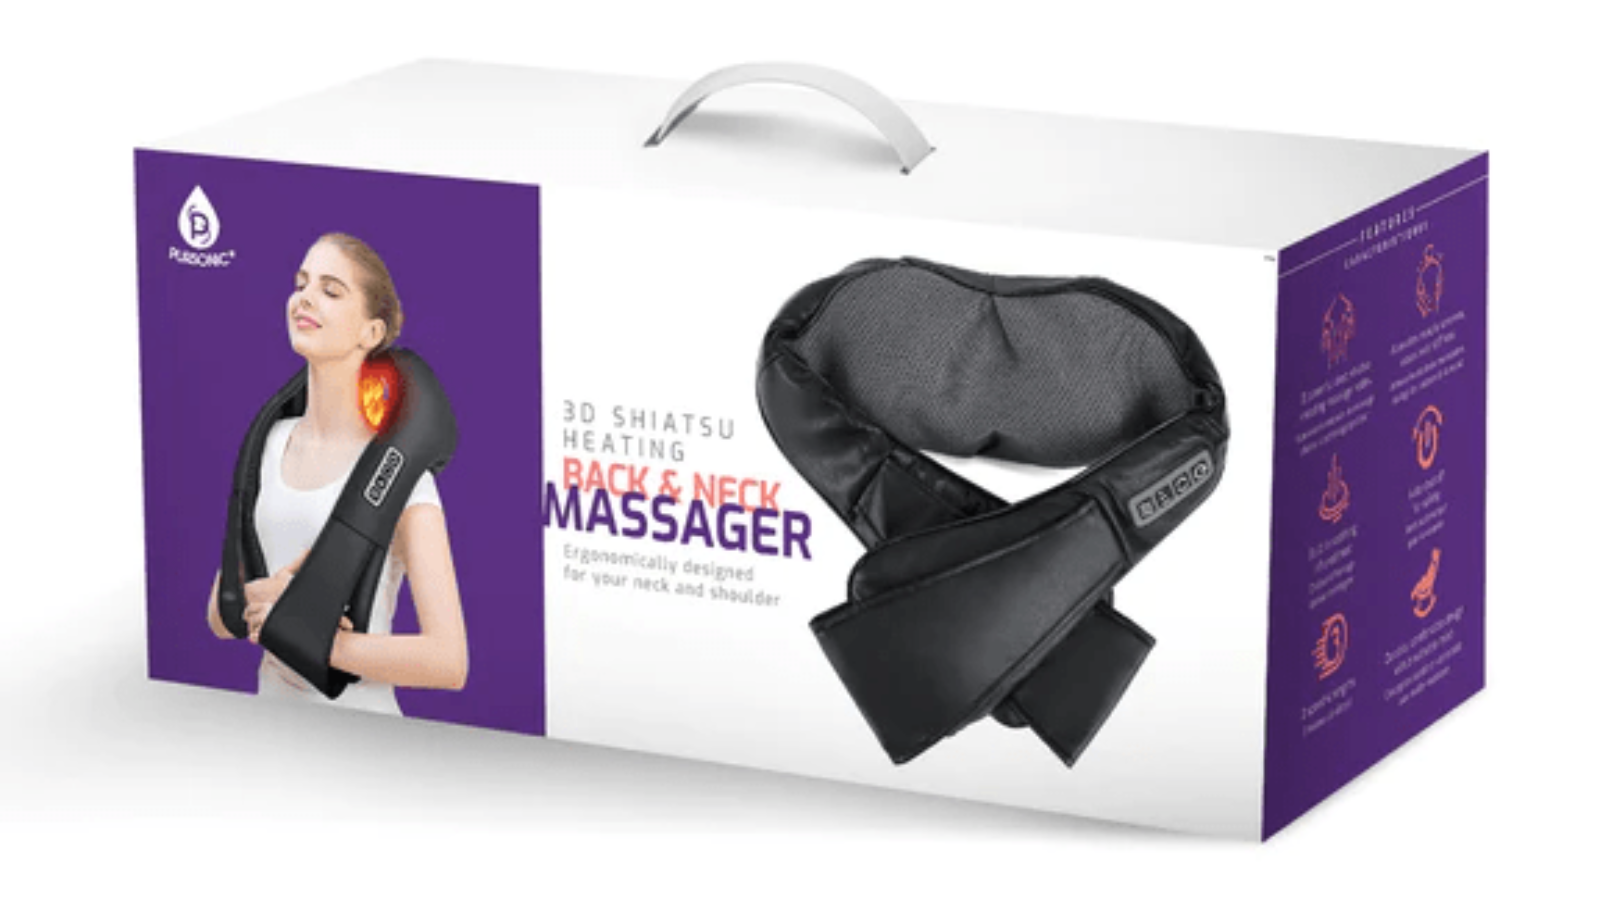 PURSONIC 3D Shiatsu Heating Back & Neck Massager